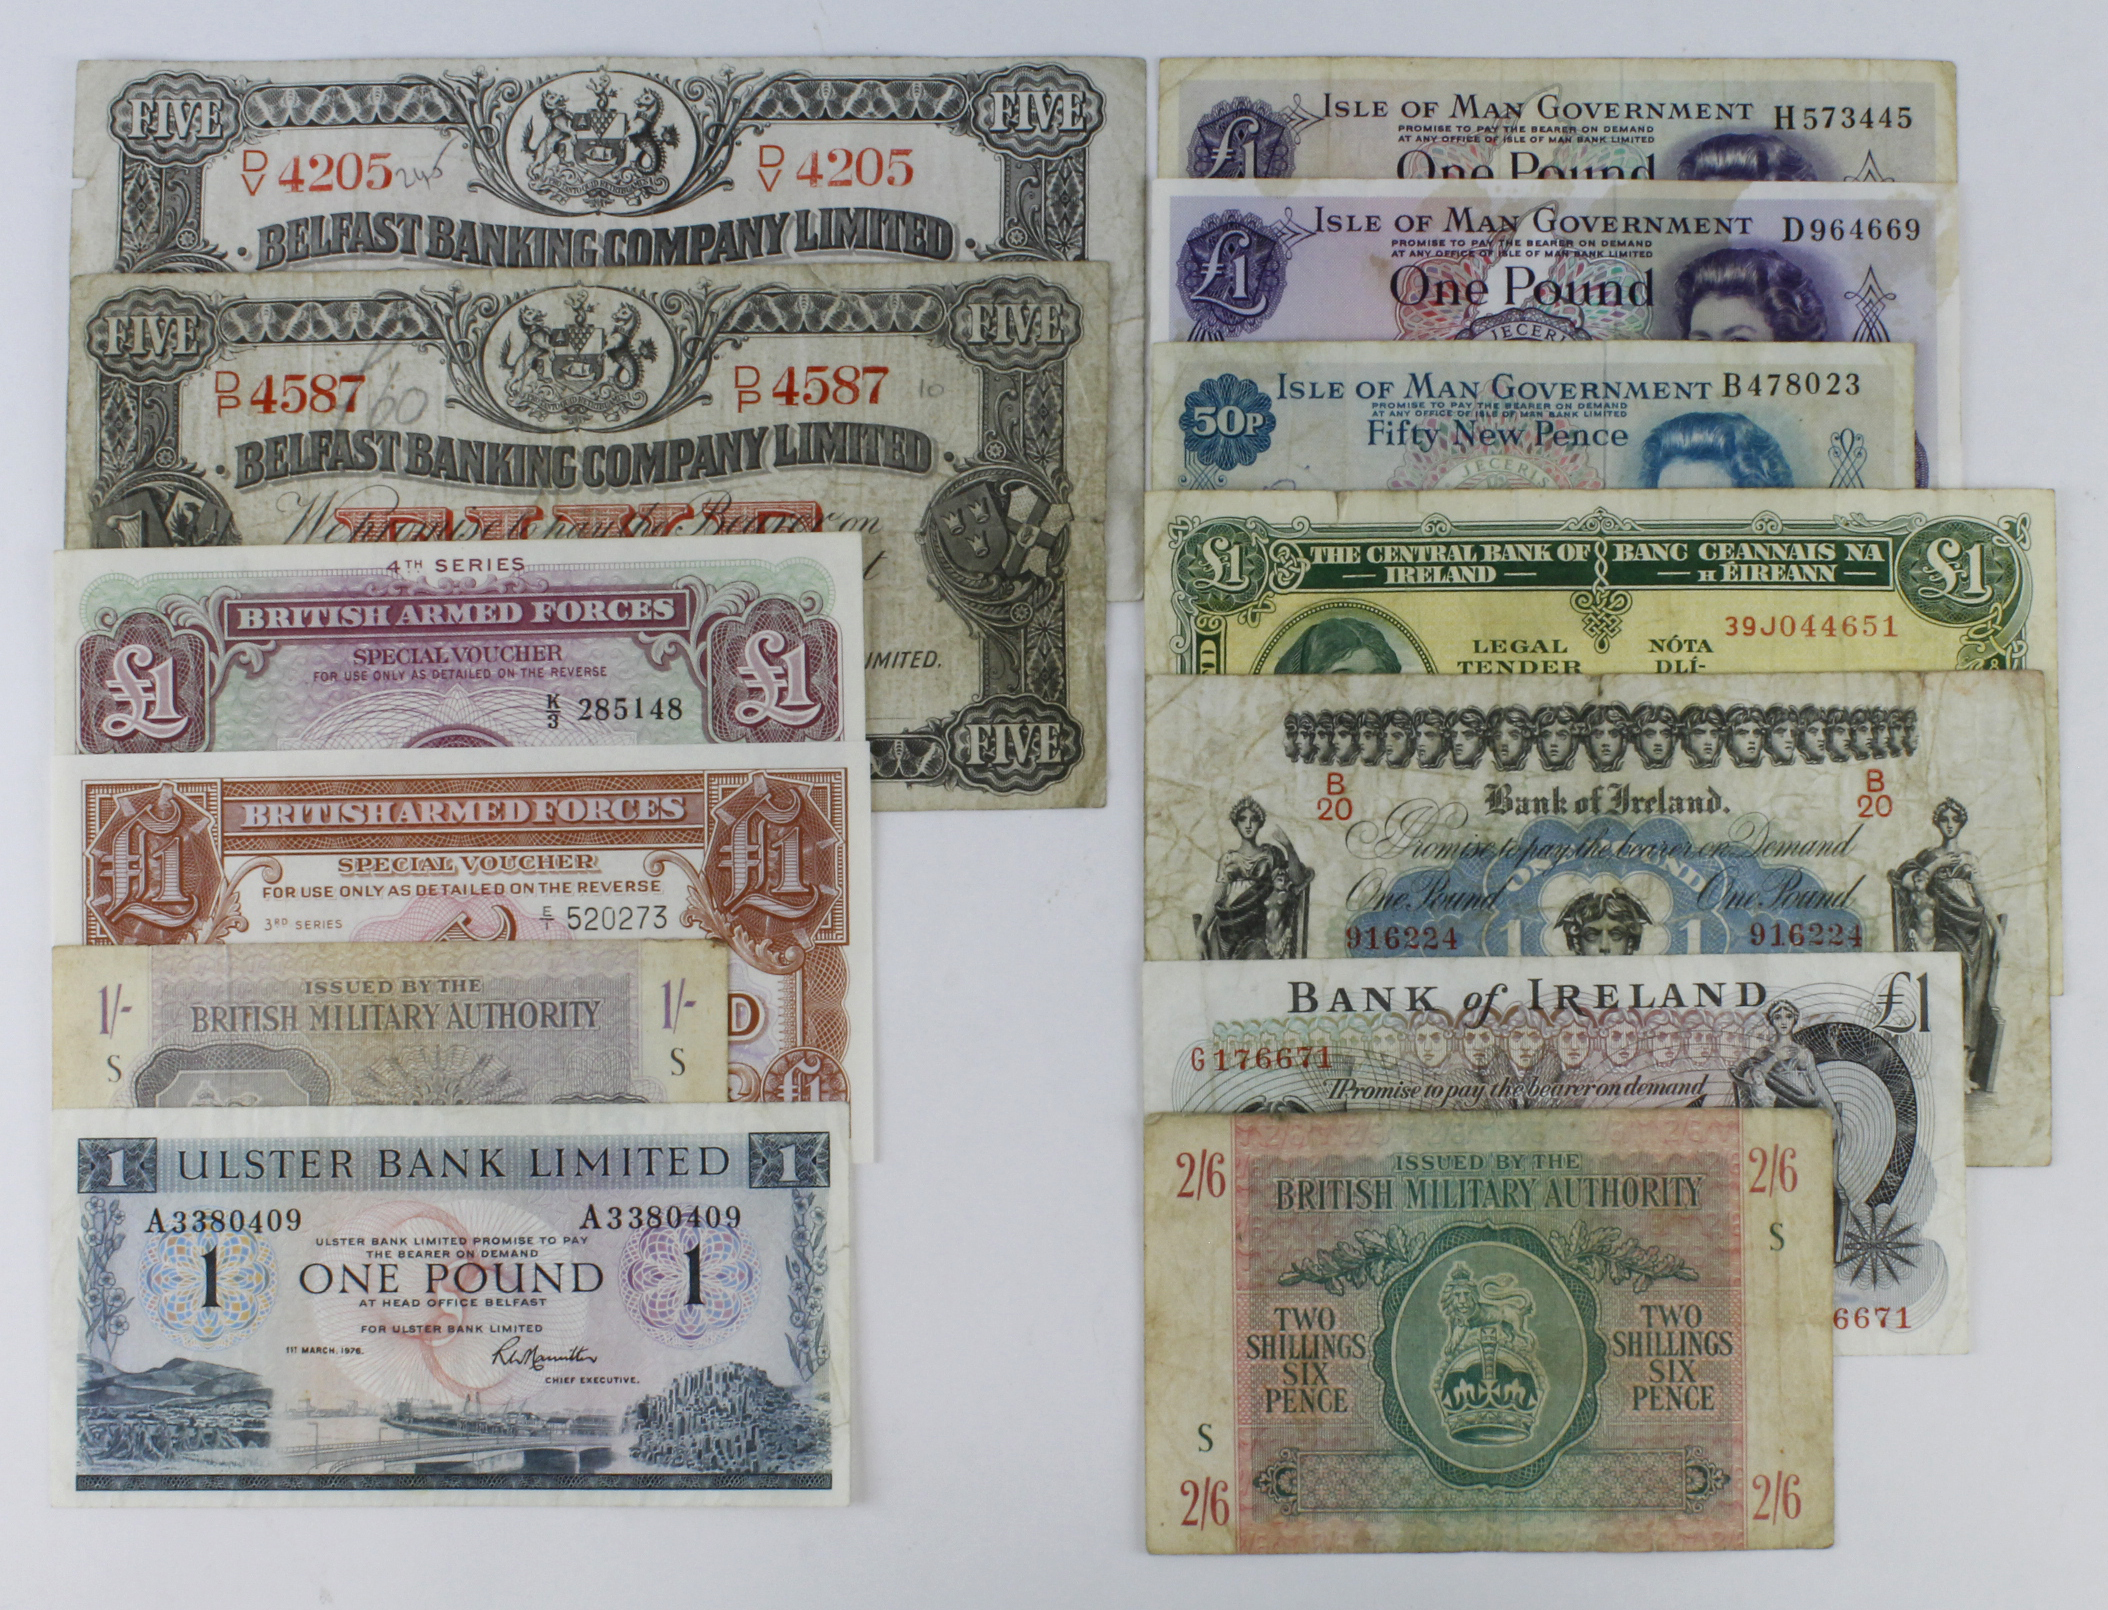 British Isles (13), Ireland Republic 1 Pound Lady Lavery dated 1971, Northern Ireland Bank of